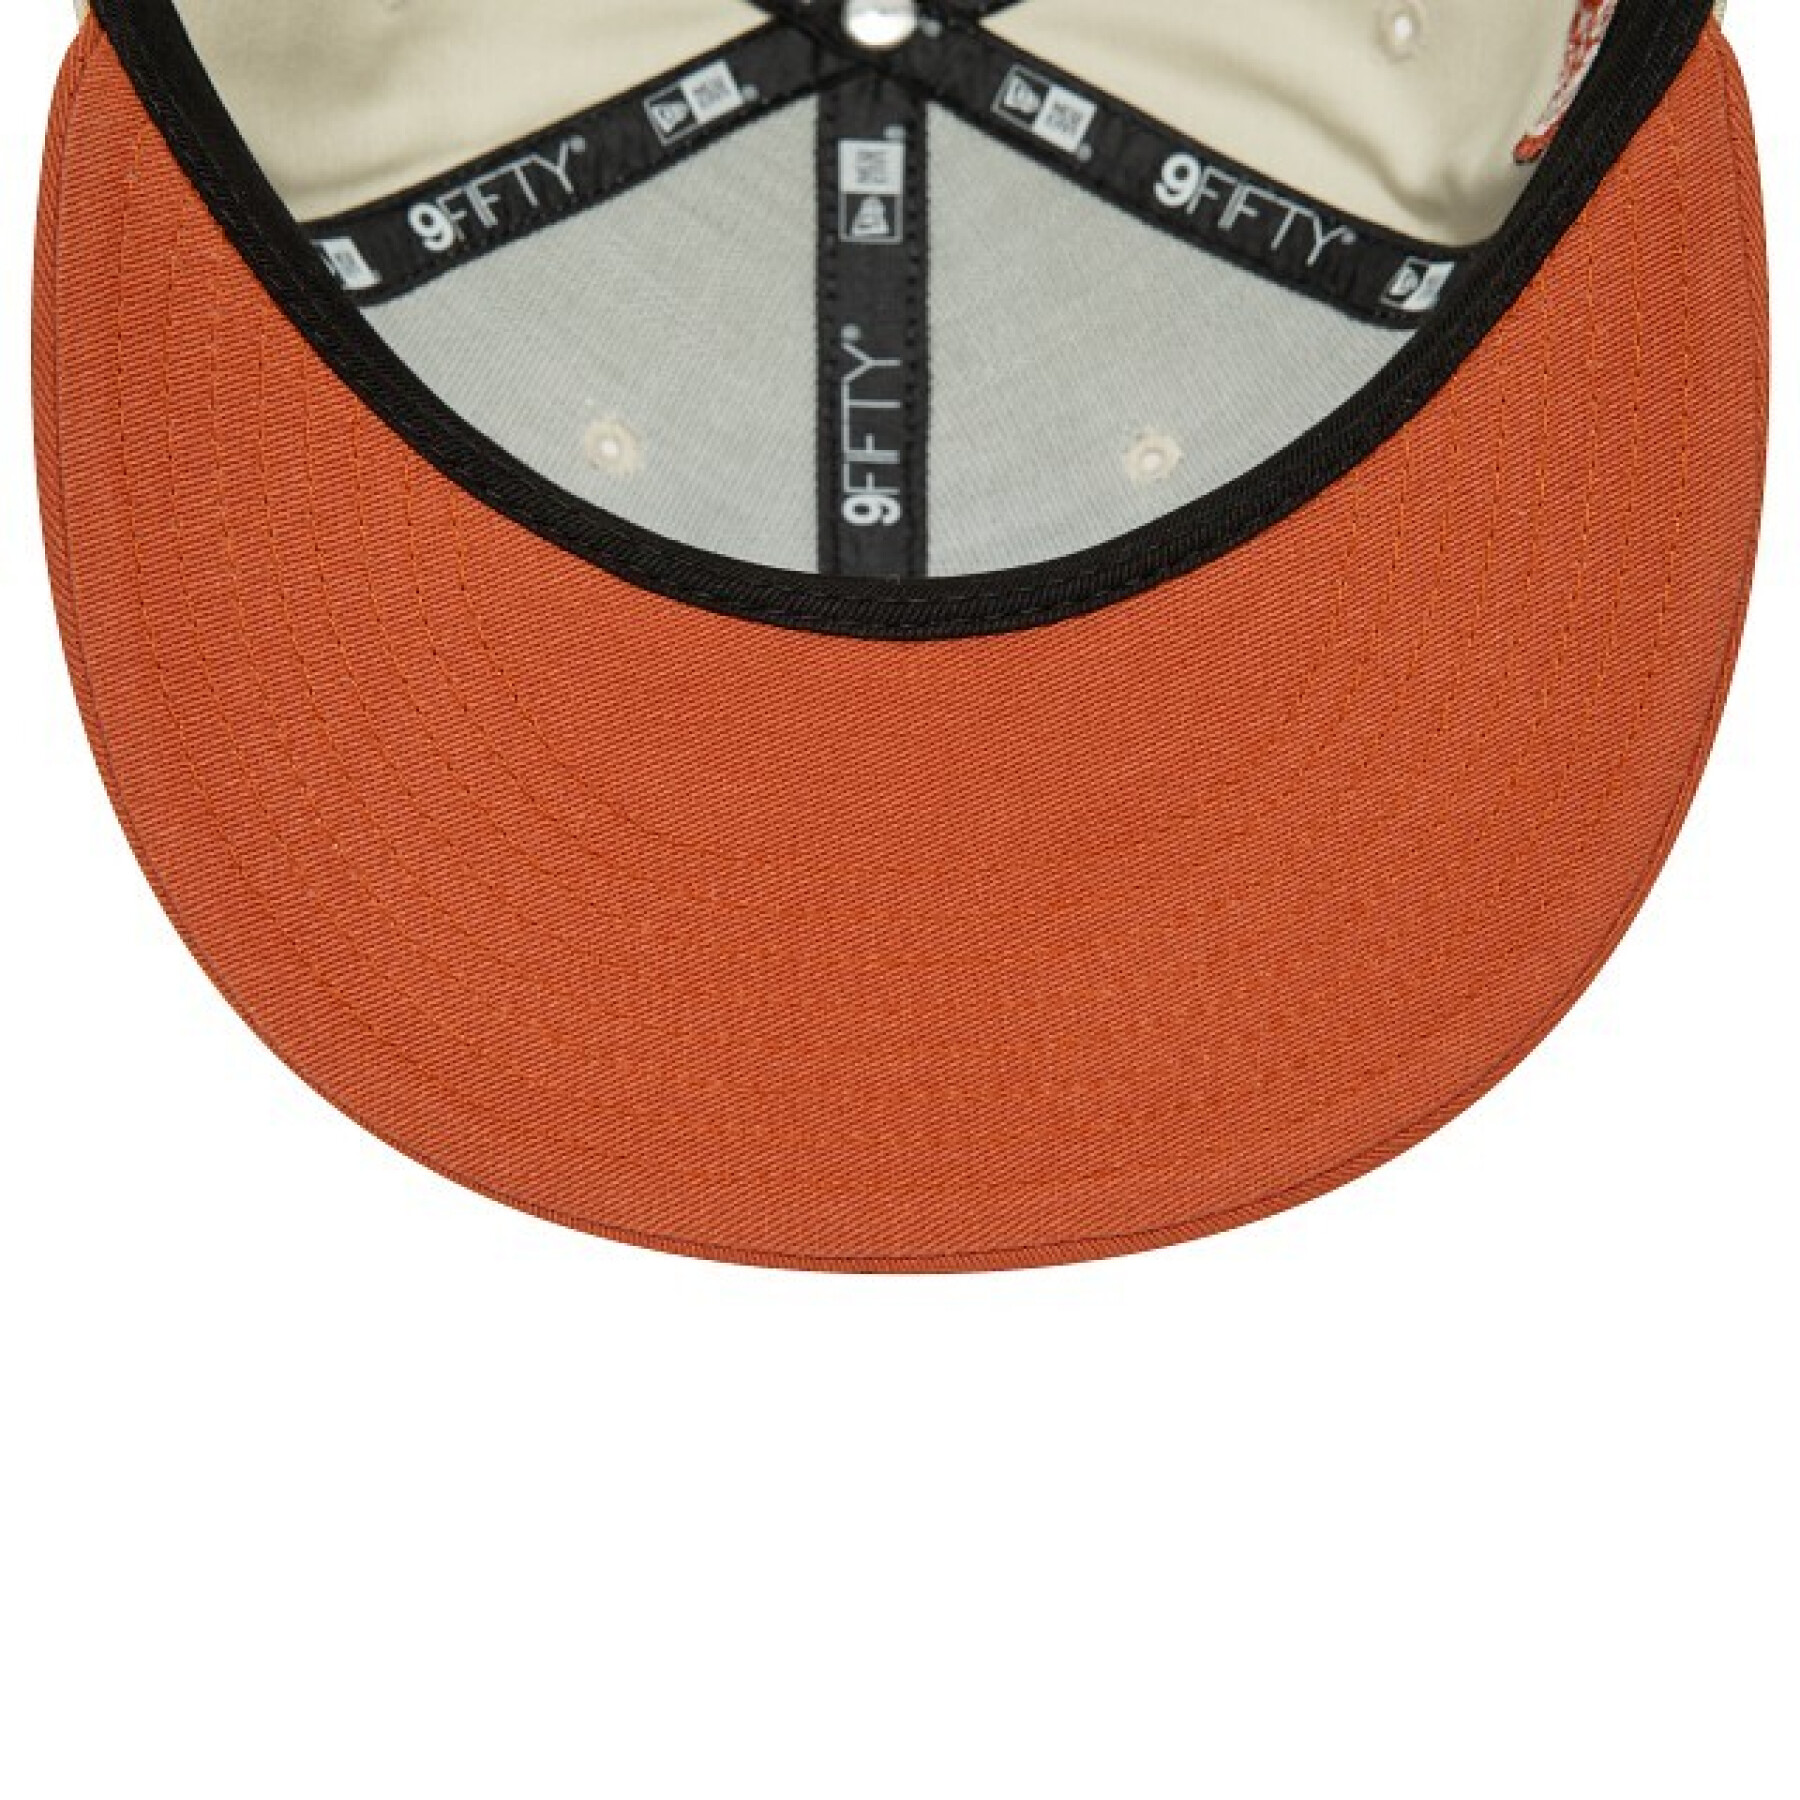 Cappellino con visiera New Era New York Yankees 9FIFTY